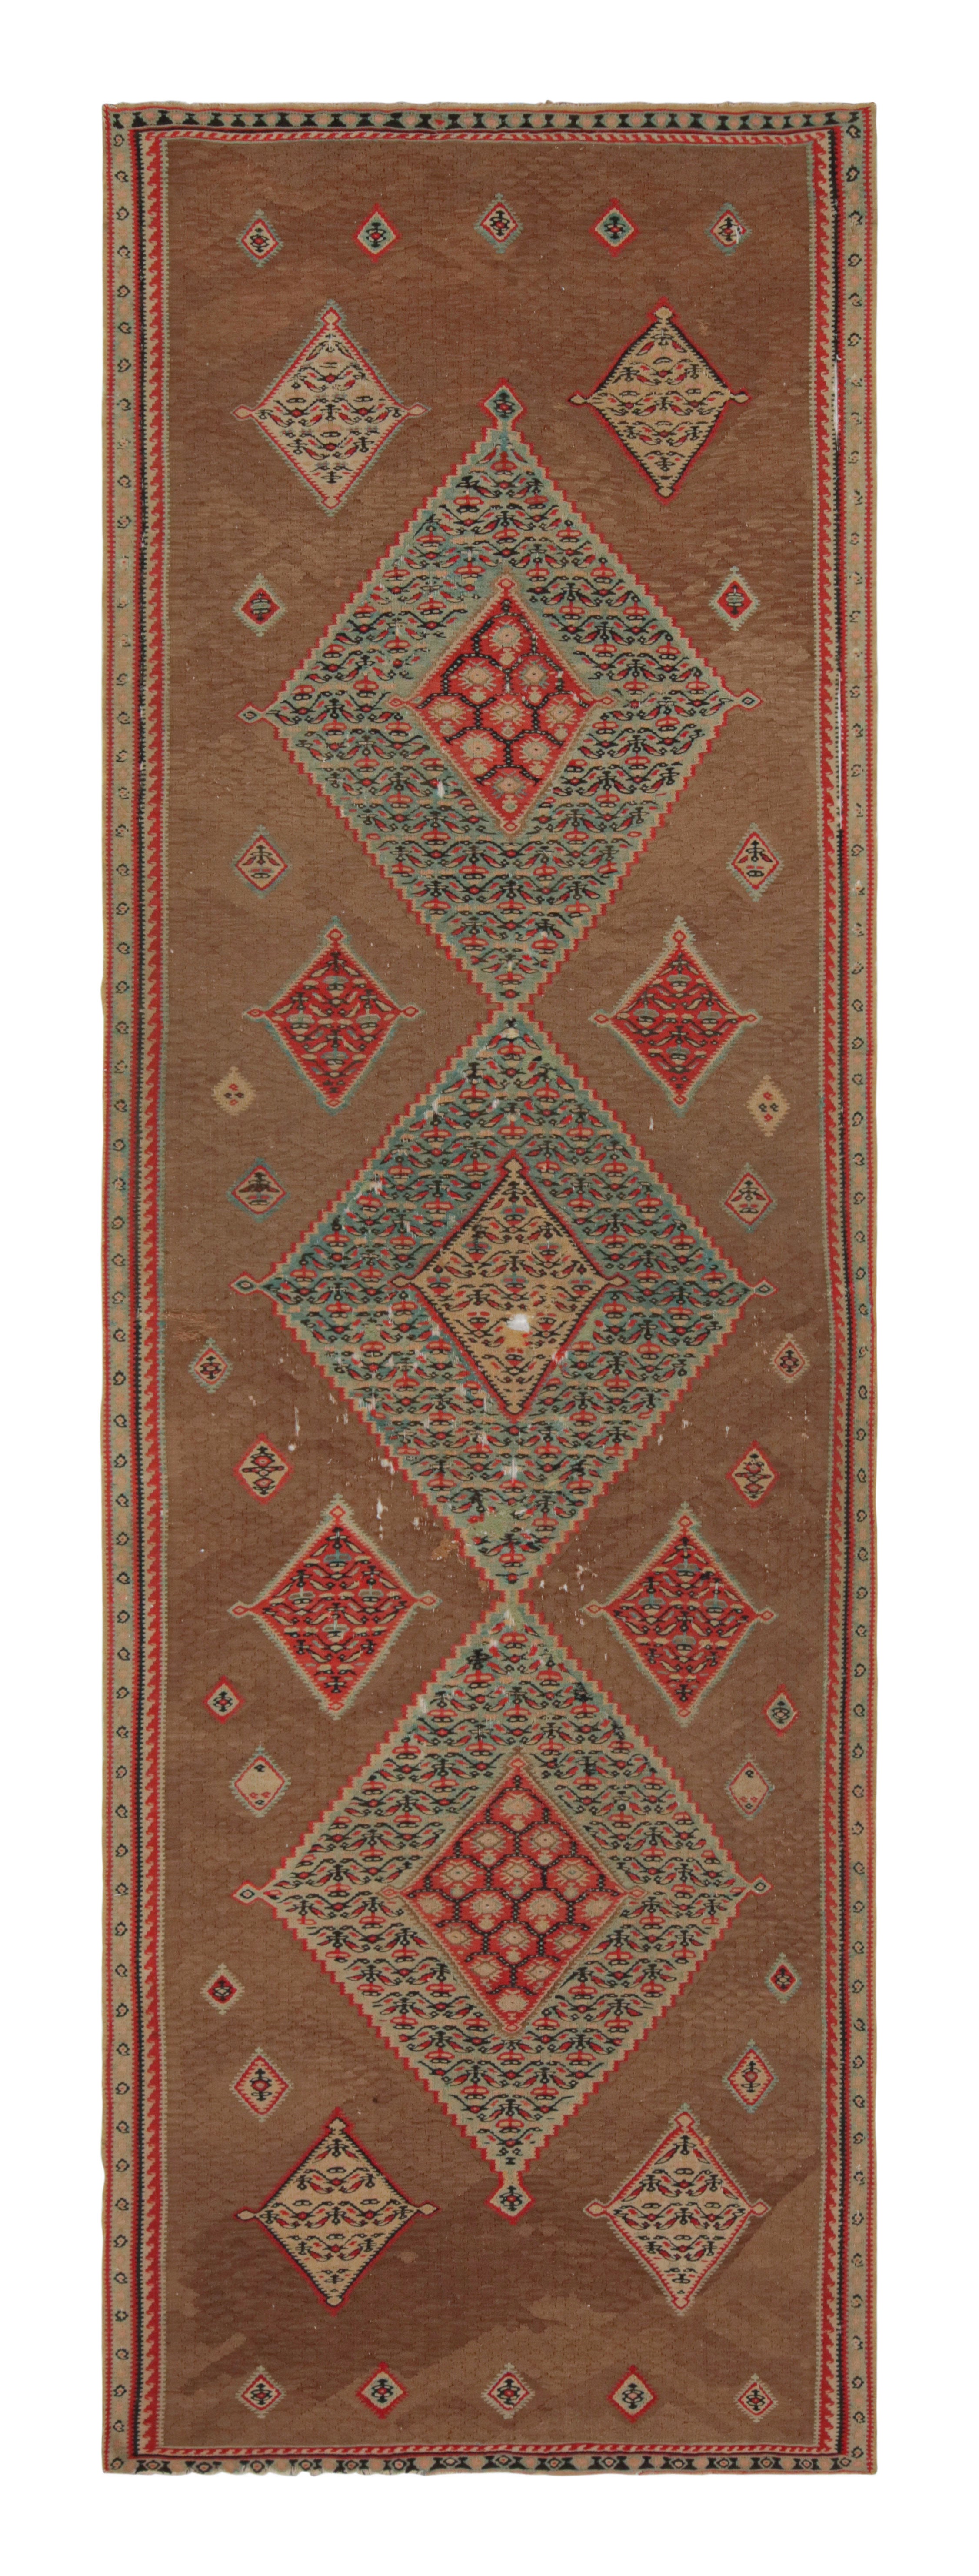 Antique Geometric Beige and Red Wool Persian Kilim-Senneh Runner by Rug & Kilim